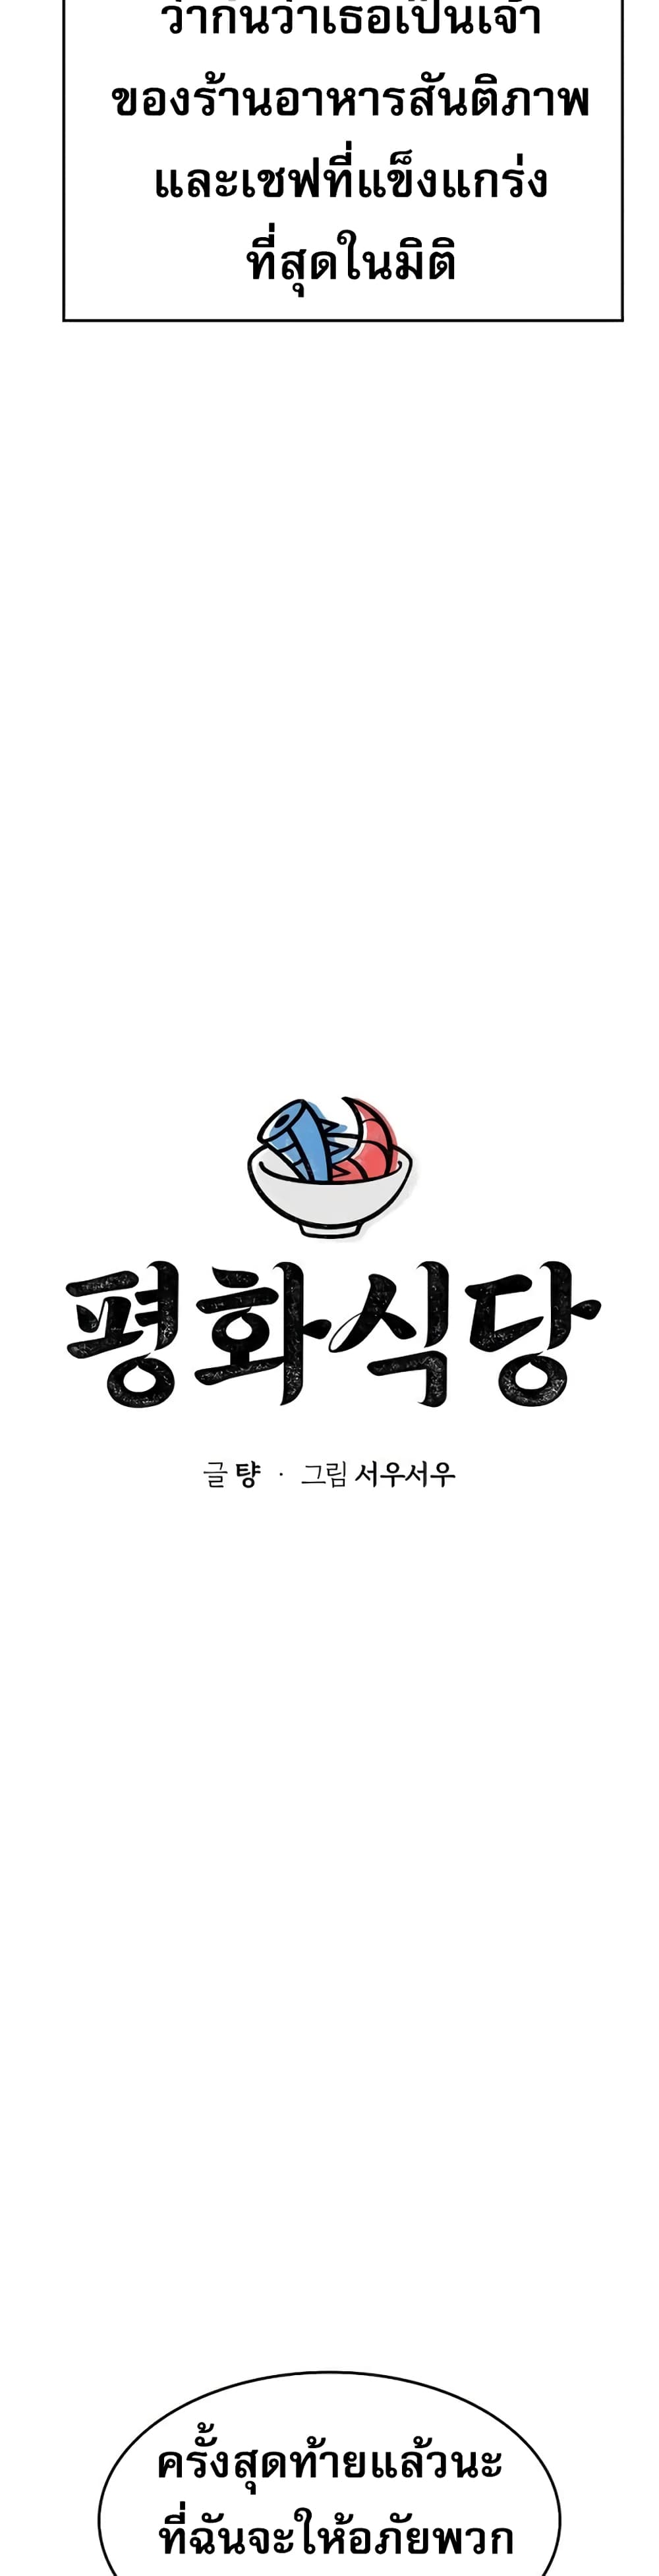 Pyeonghwa Restaurant 2-2